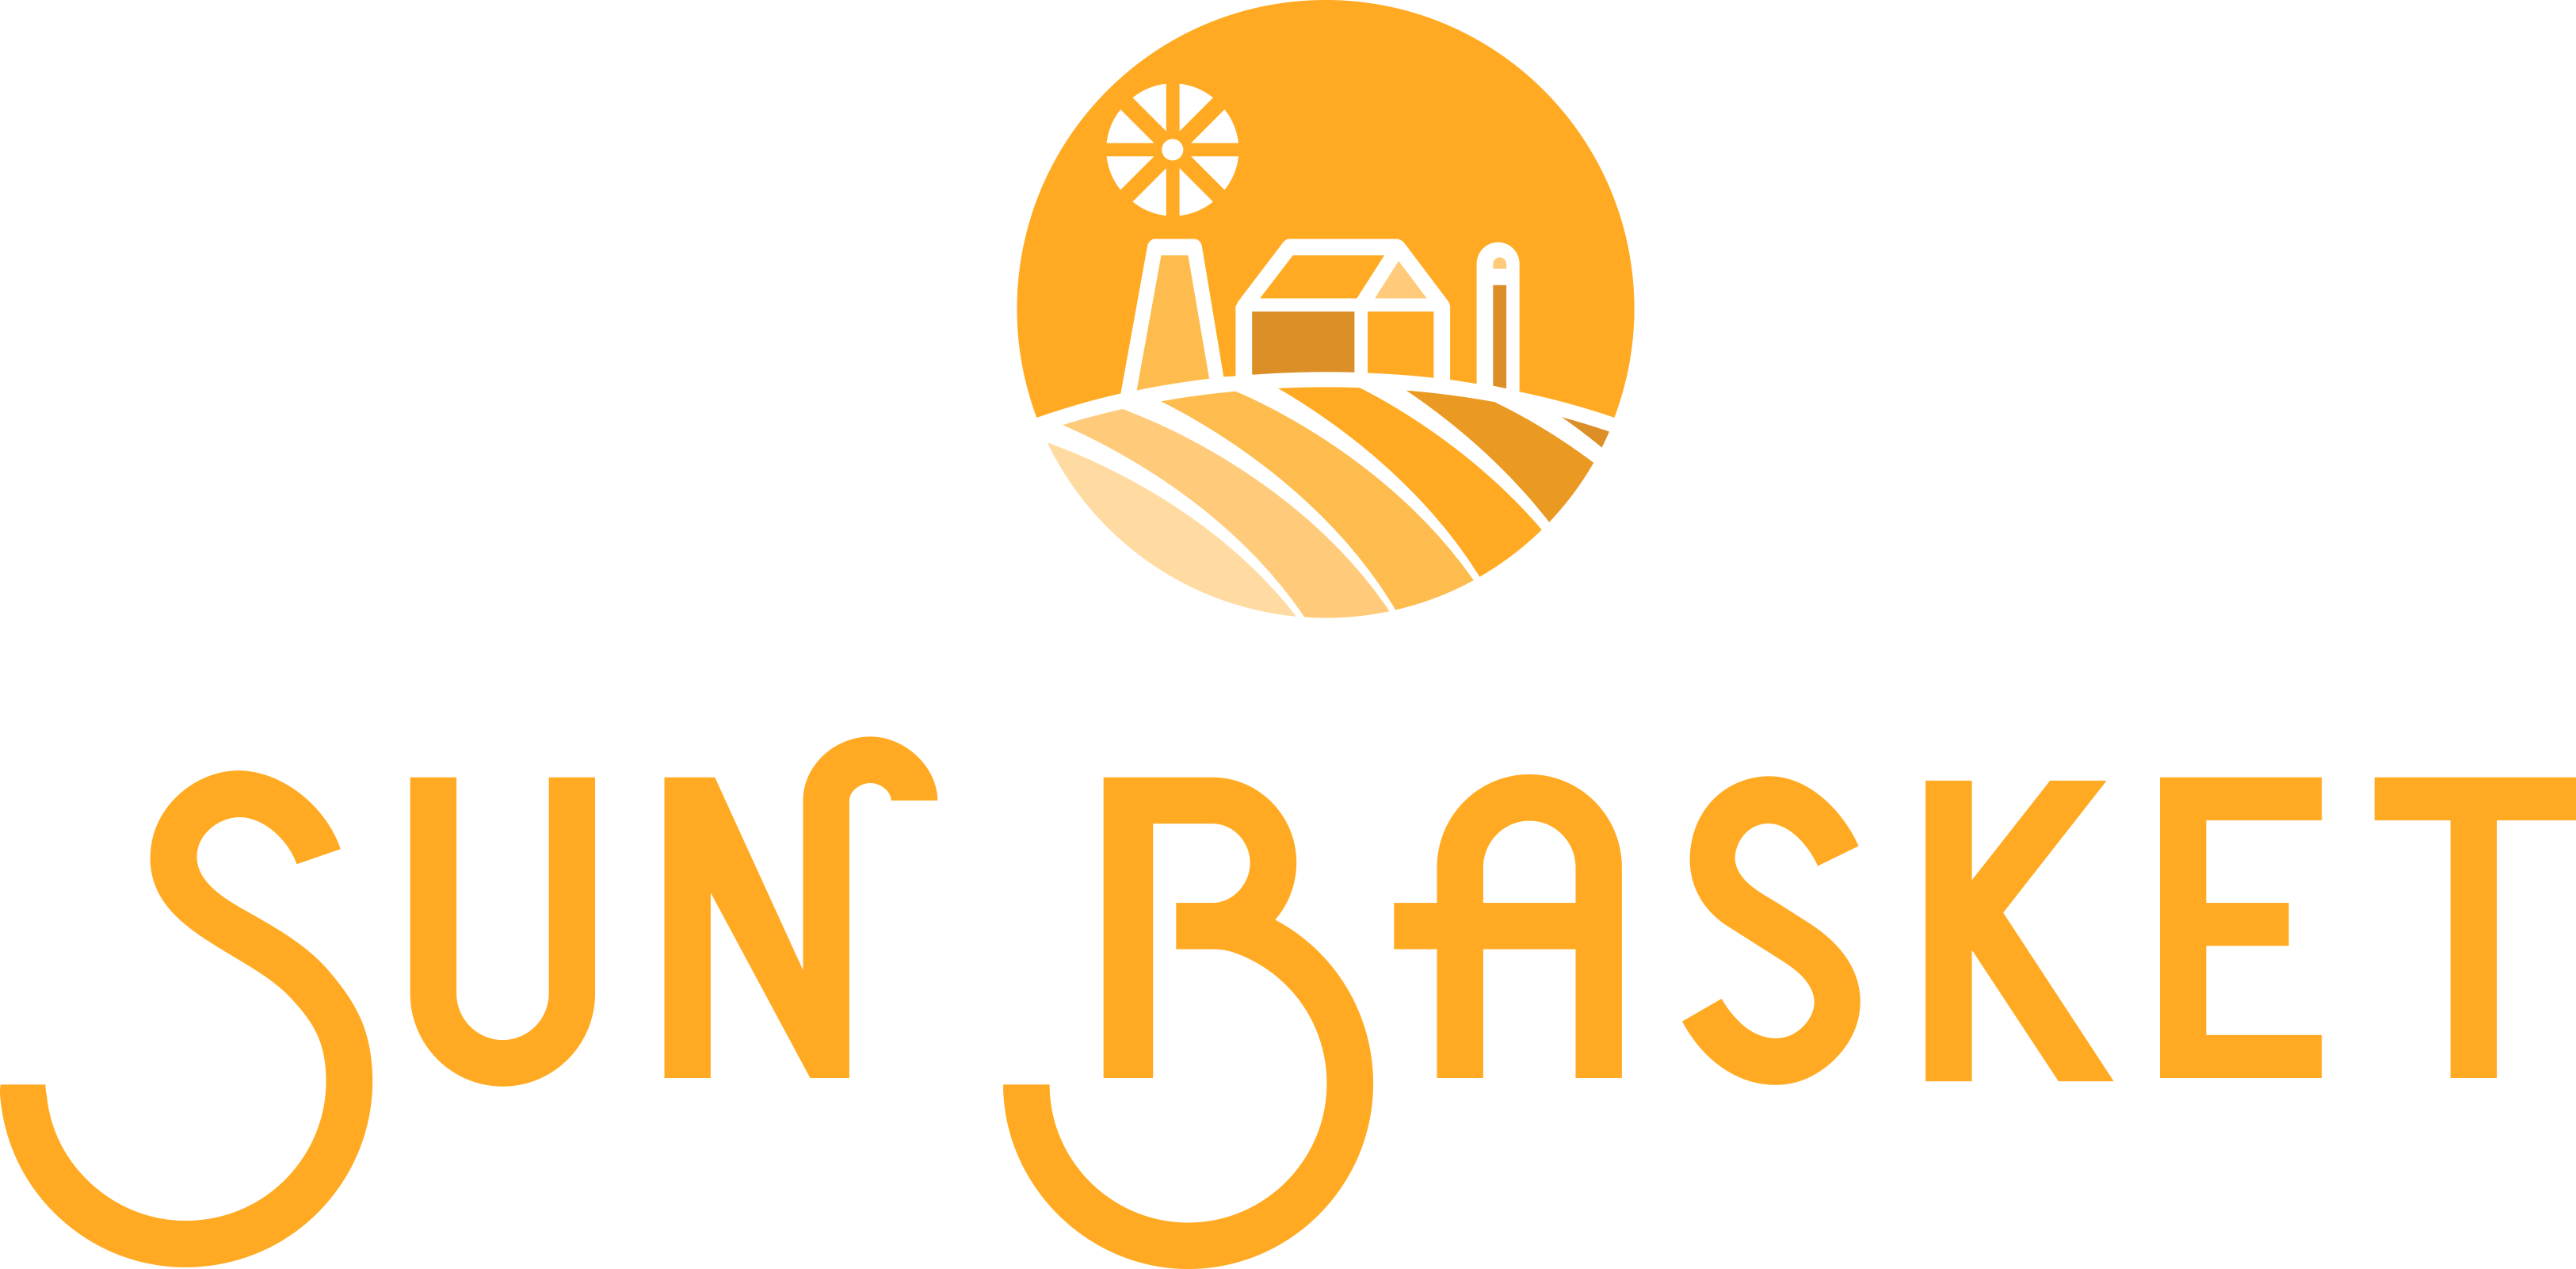 Sun Basket Meal Kit Meal Delivery Service Organic Food - Sun Basket Logo (3251x1601)